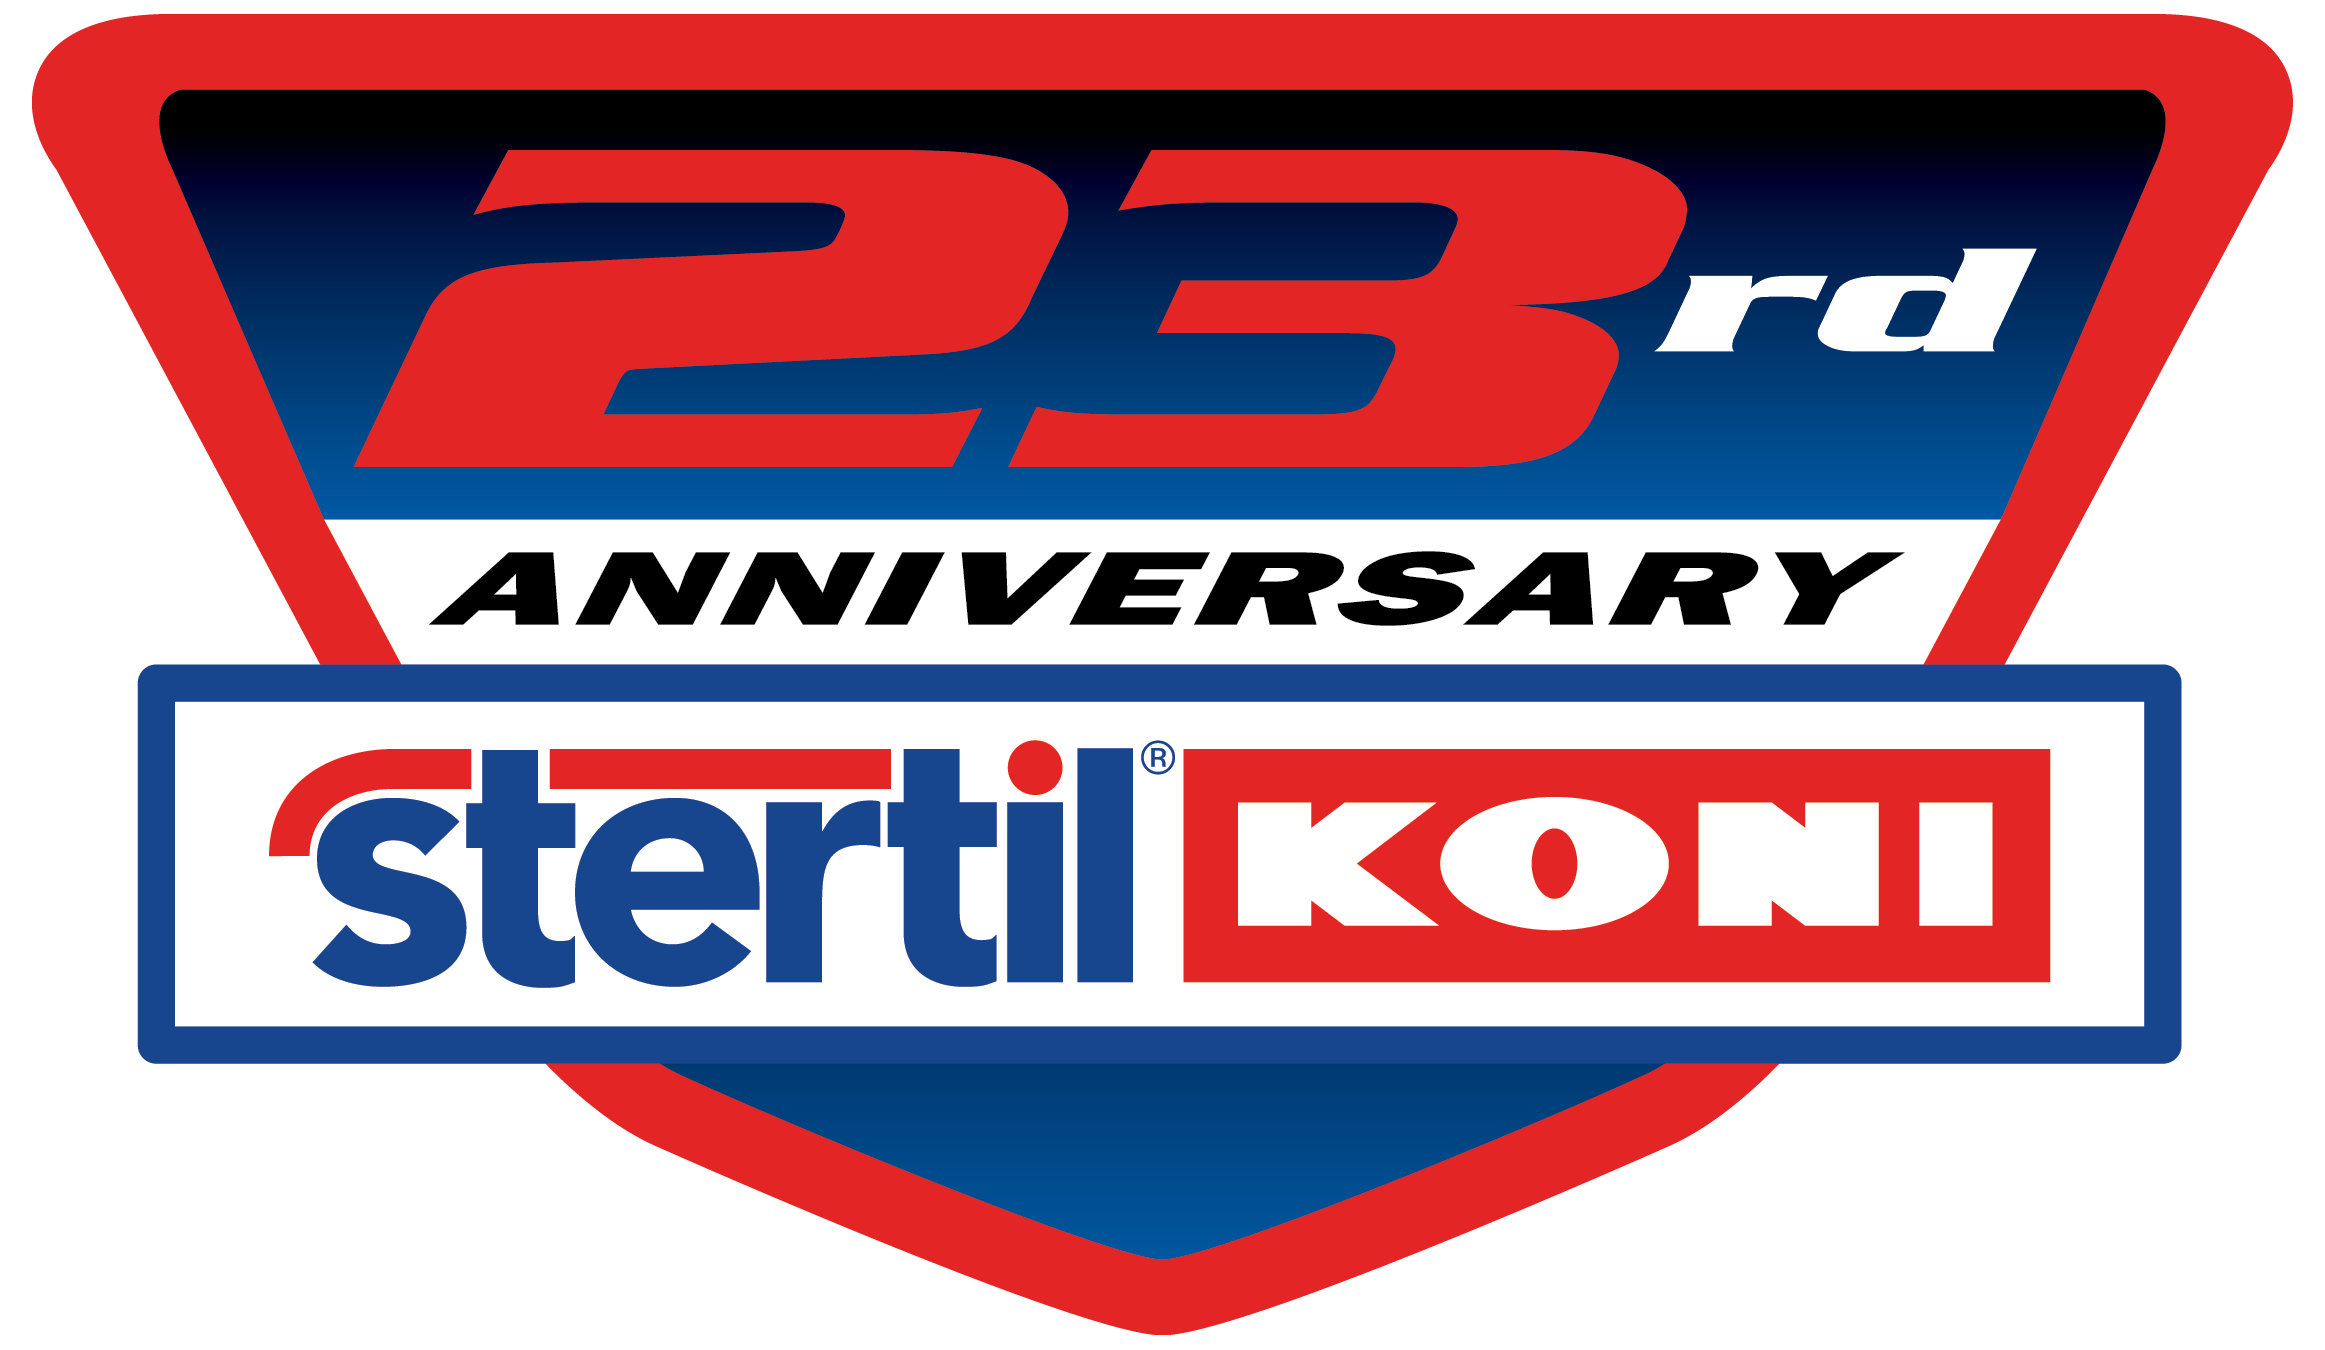 Stertil-Koni 23rd Anniversary Distributor Meeting Logo